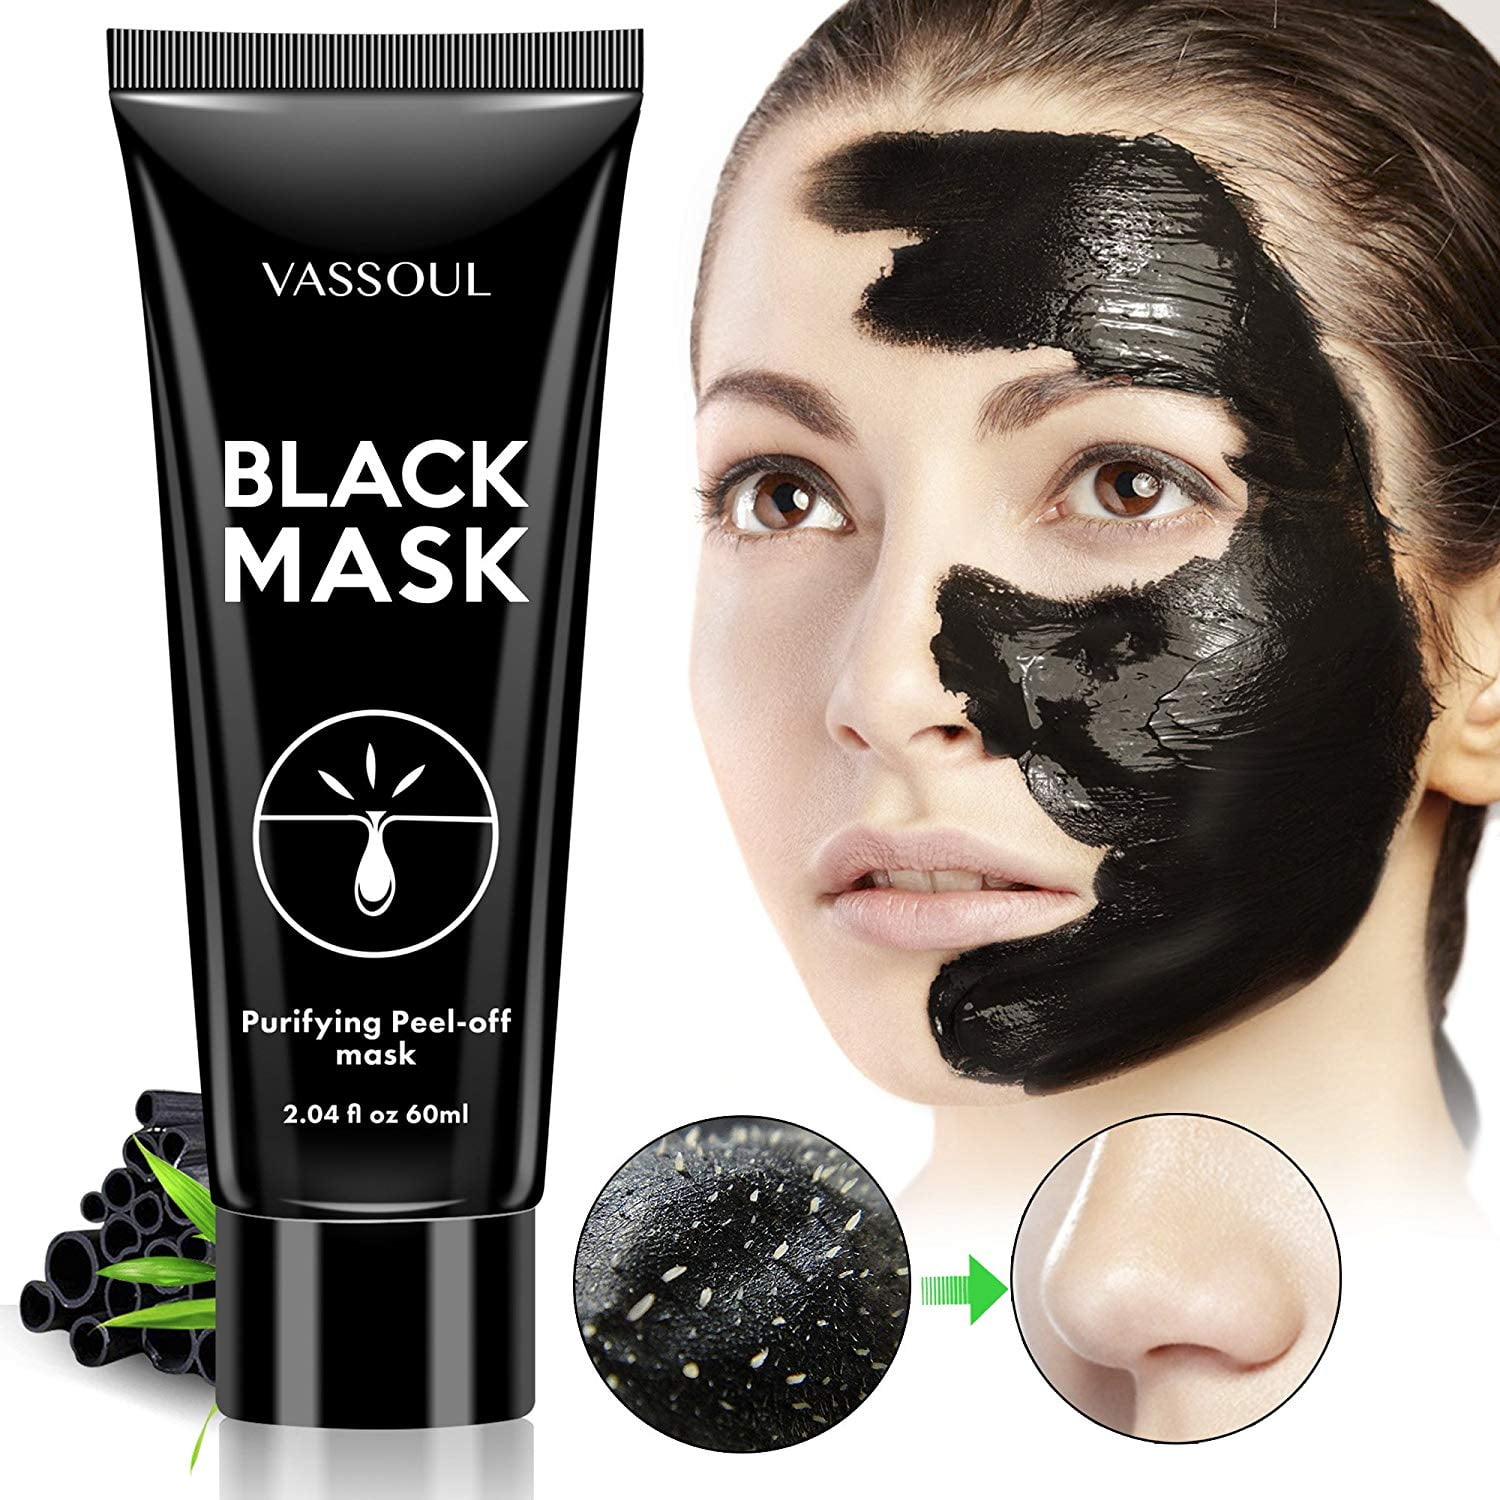 Bha blackhead. Black Mask Peel off Bamboo Charcoal. Маска Blackhead Remover Mask. Anti Blackheads Cleansing facial Mask. Chovemoar Black Peel off Mask.